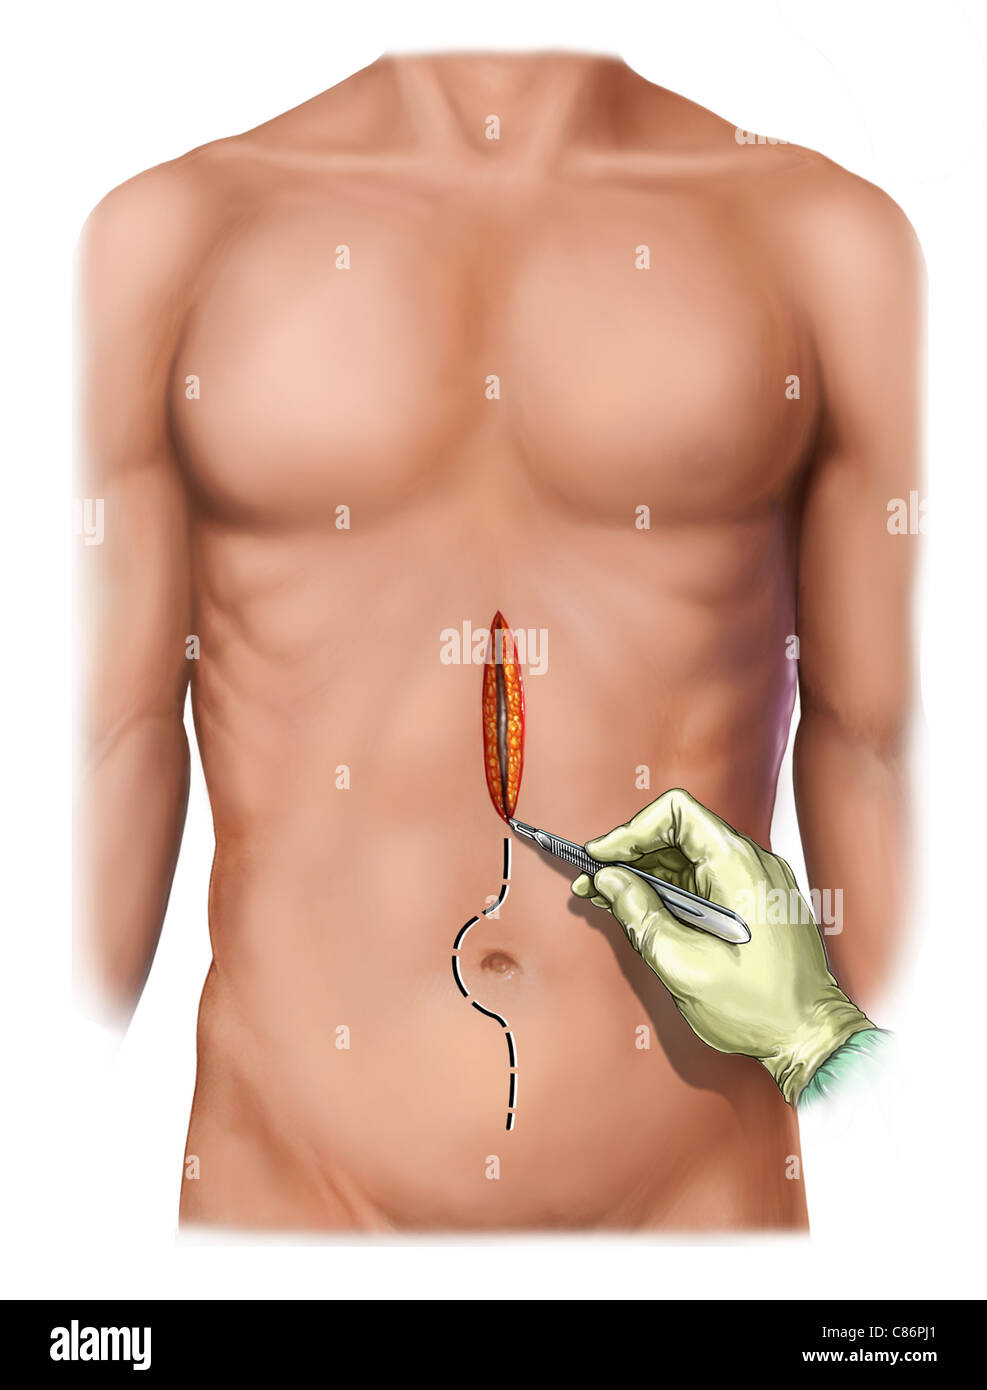 abdominal-midline-incision-C86PJ1.jpg